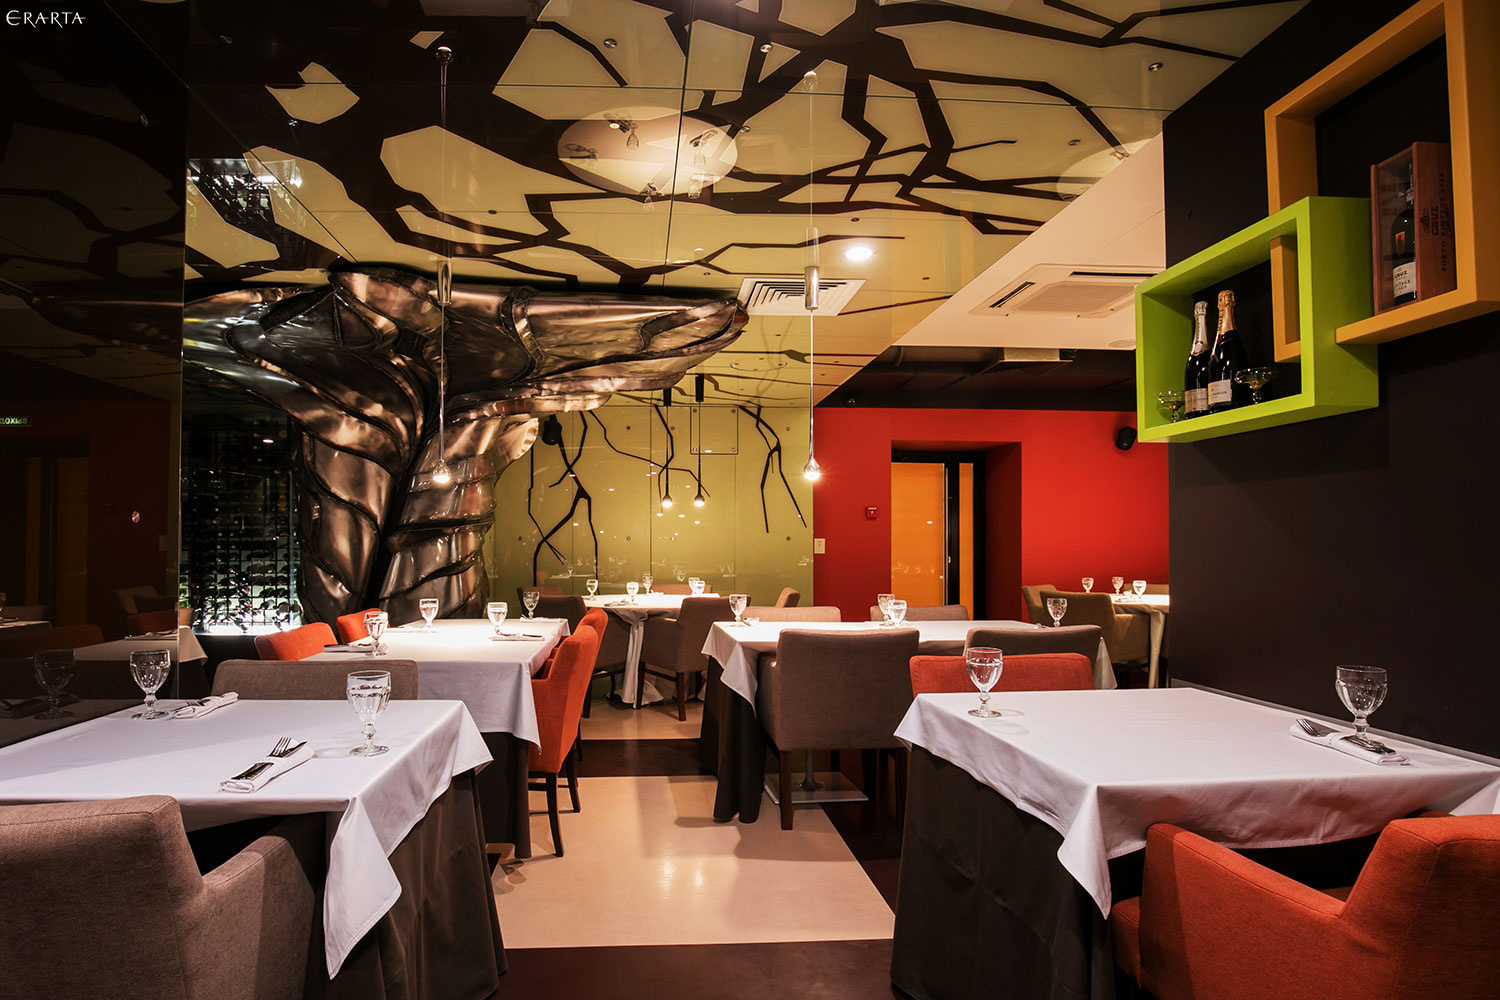 Changes in Erarta Restaurant Opening Hours on 15 October